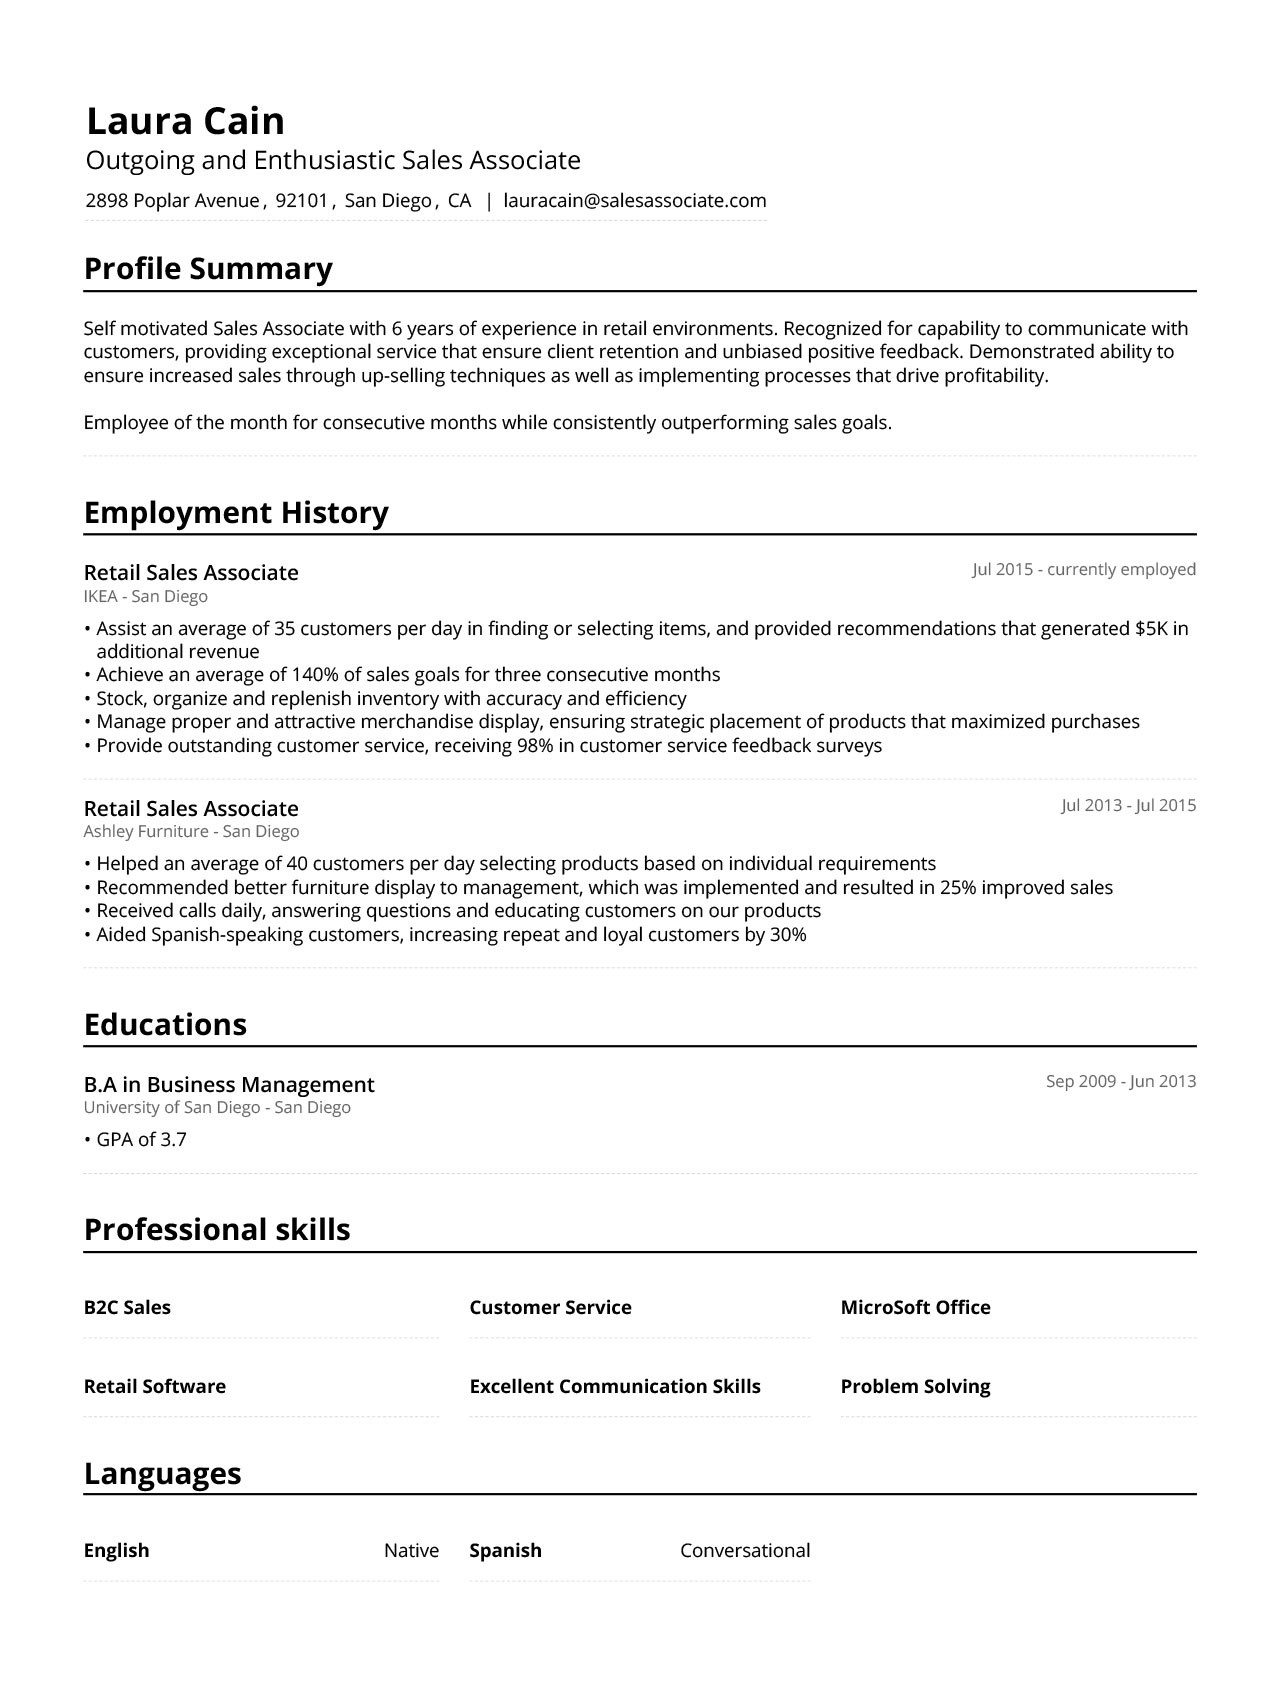 sales associate resume example